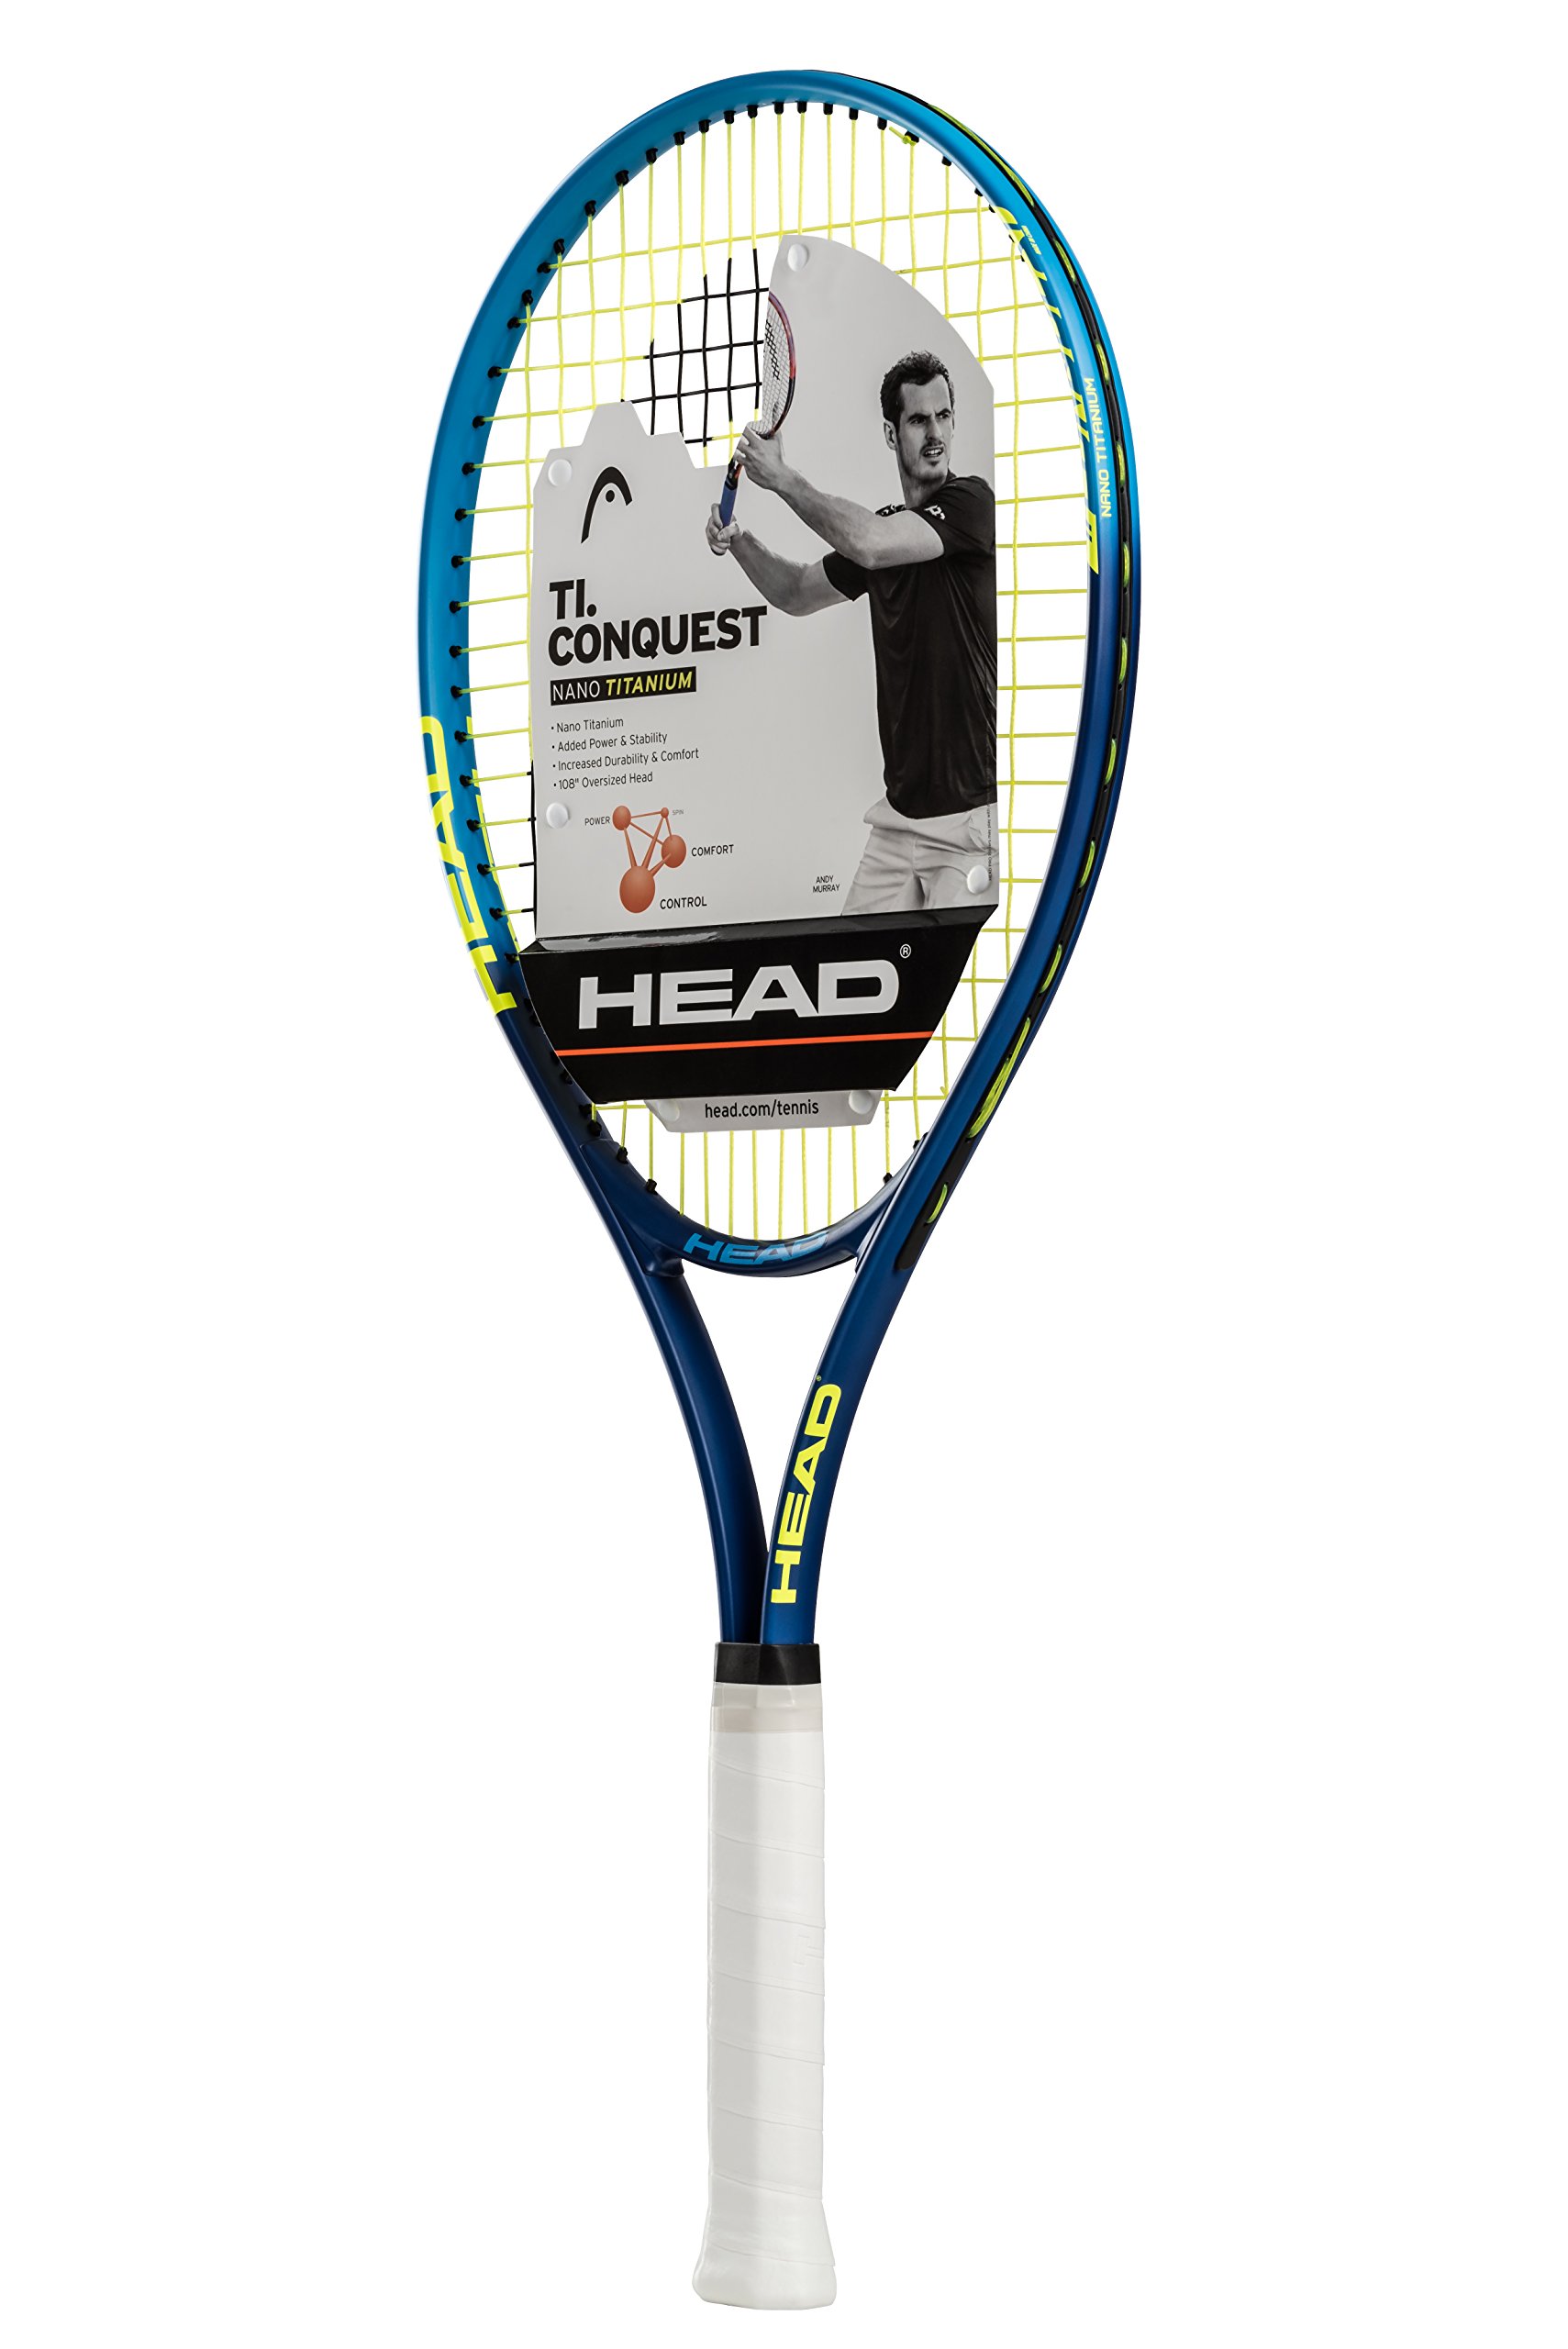 HEAD Ti conquest Tennis Racket - Pre-Strung Head Light Balance 27 Inch Racquet - 4 14 in grip